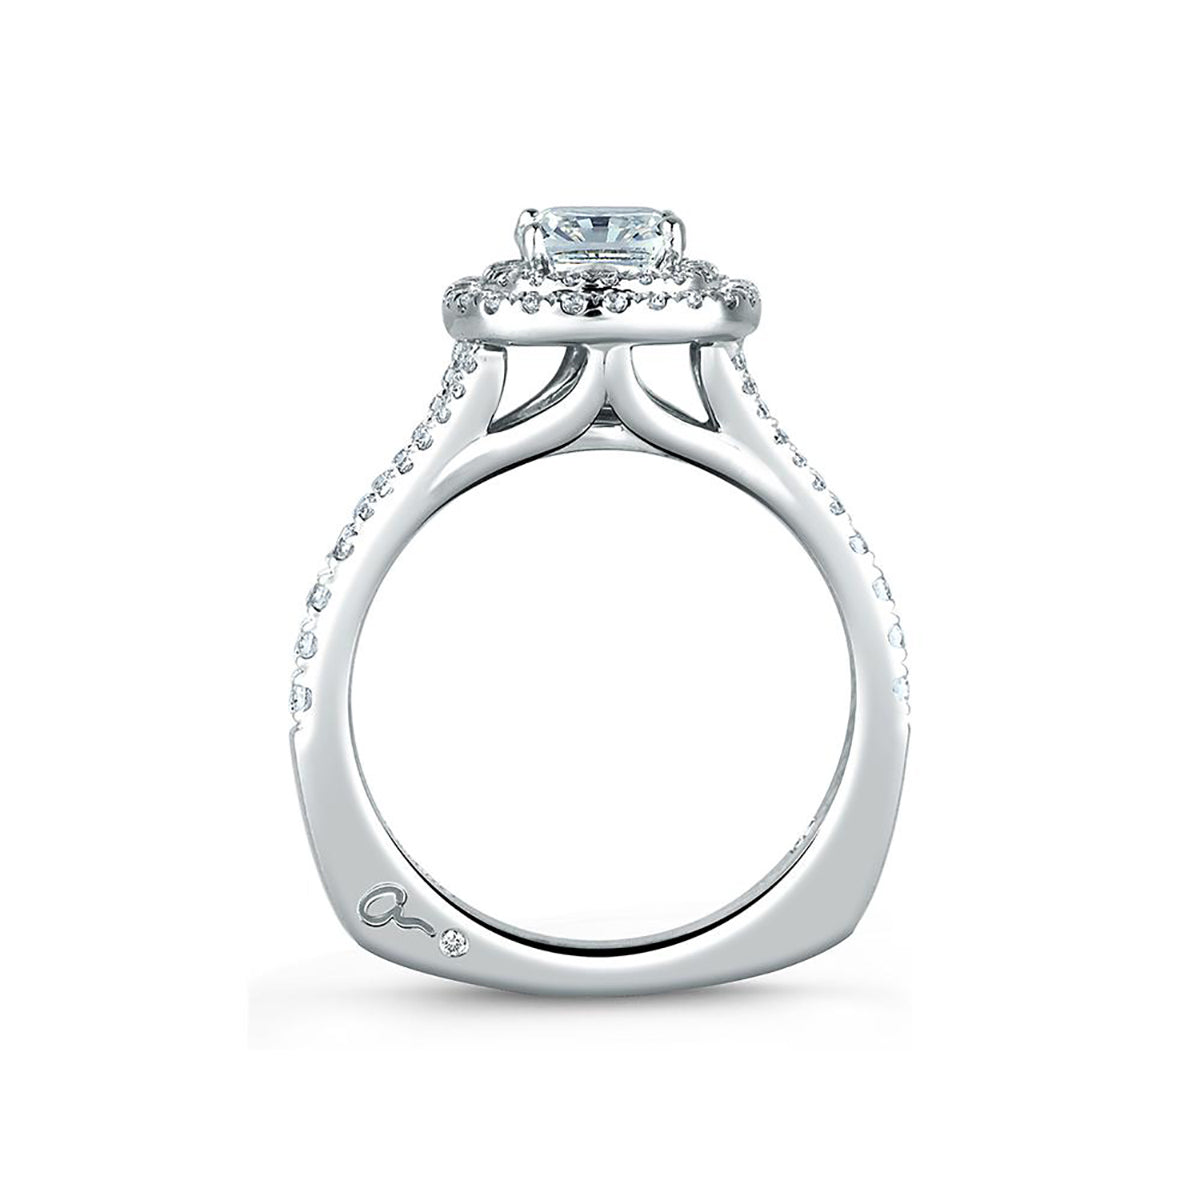 A.Jaffe Split Shank Double Halo Cushion Diamond Engagement Ring MES574/156